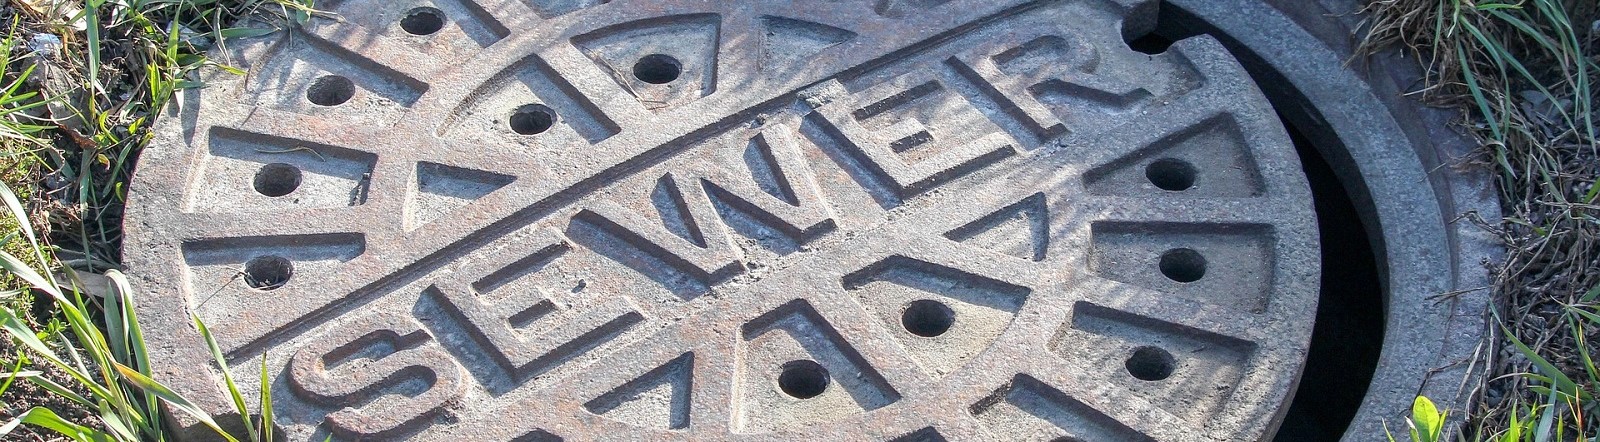 Photo of Sewer